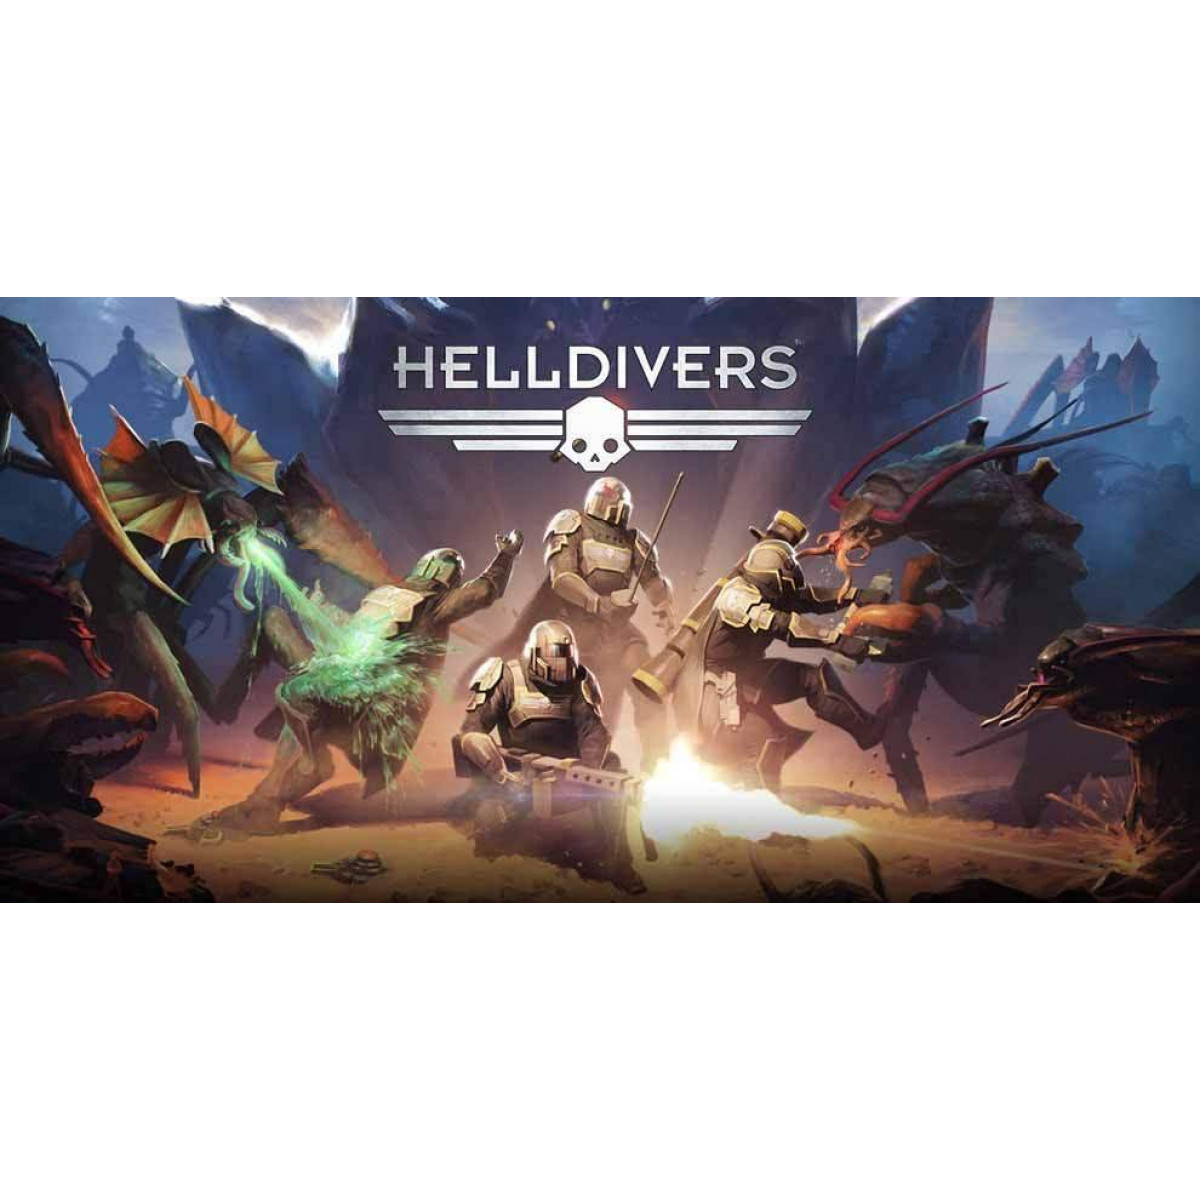 DLC Helldivers 2. Helldivers 1. Helldivers персонажи арт. Helldivers геймплей.